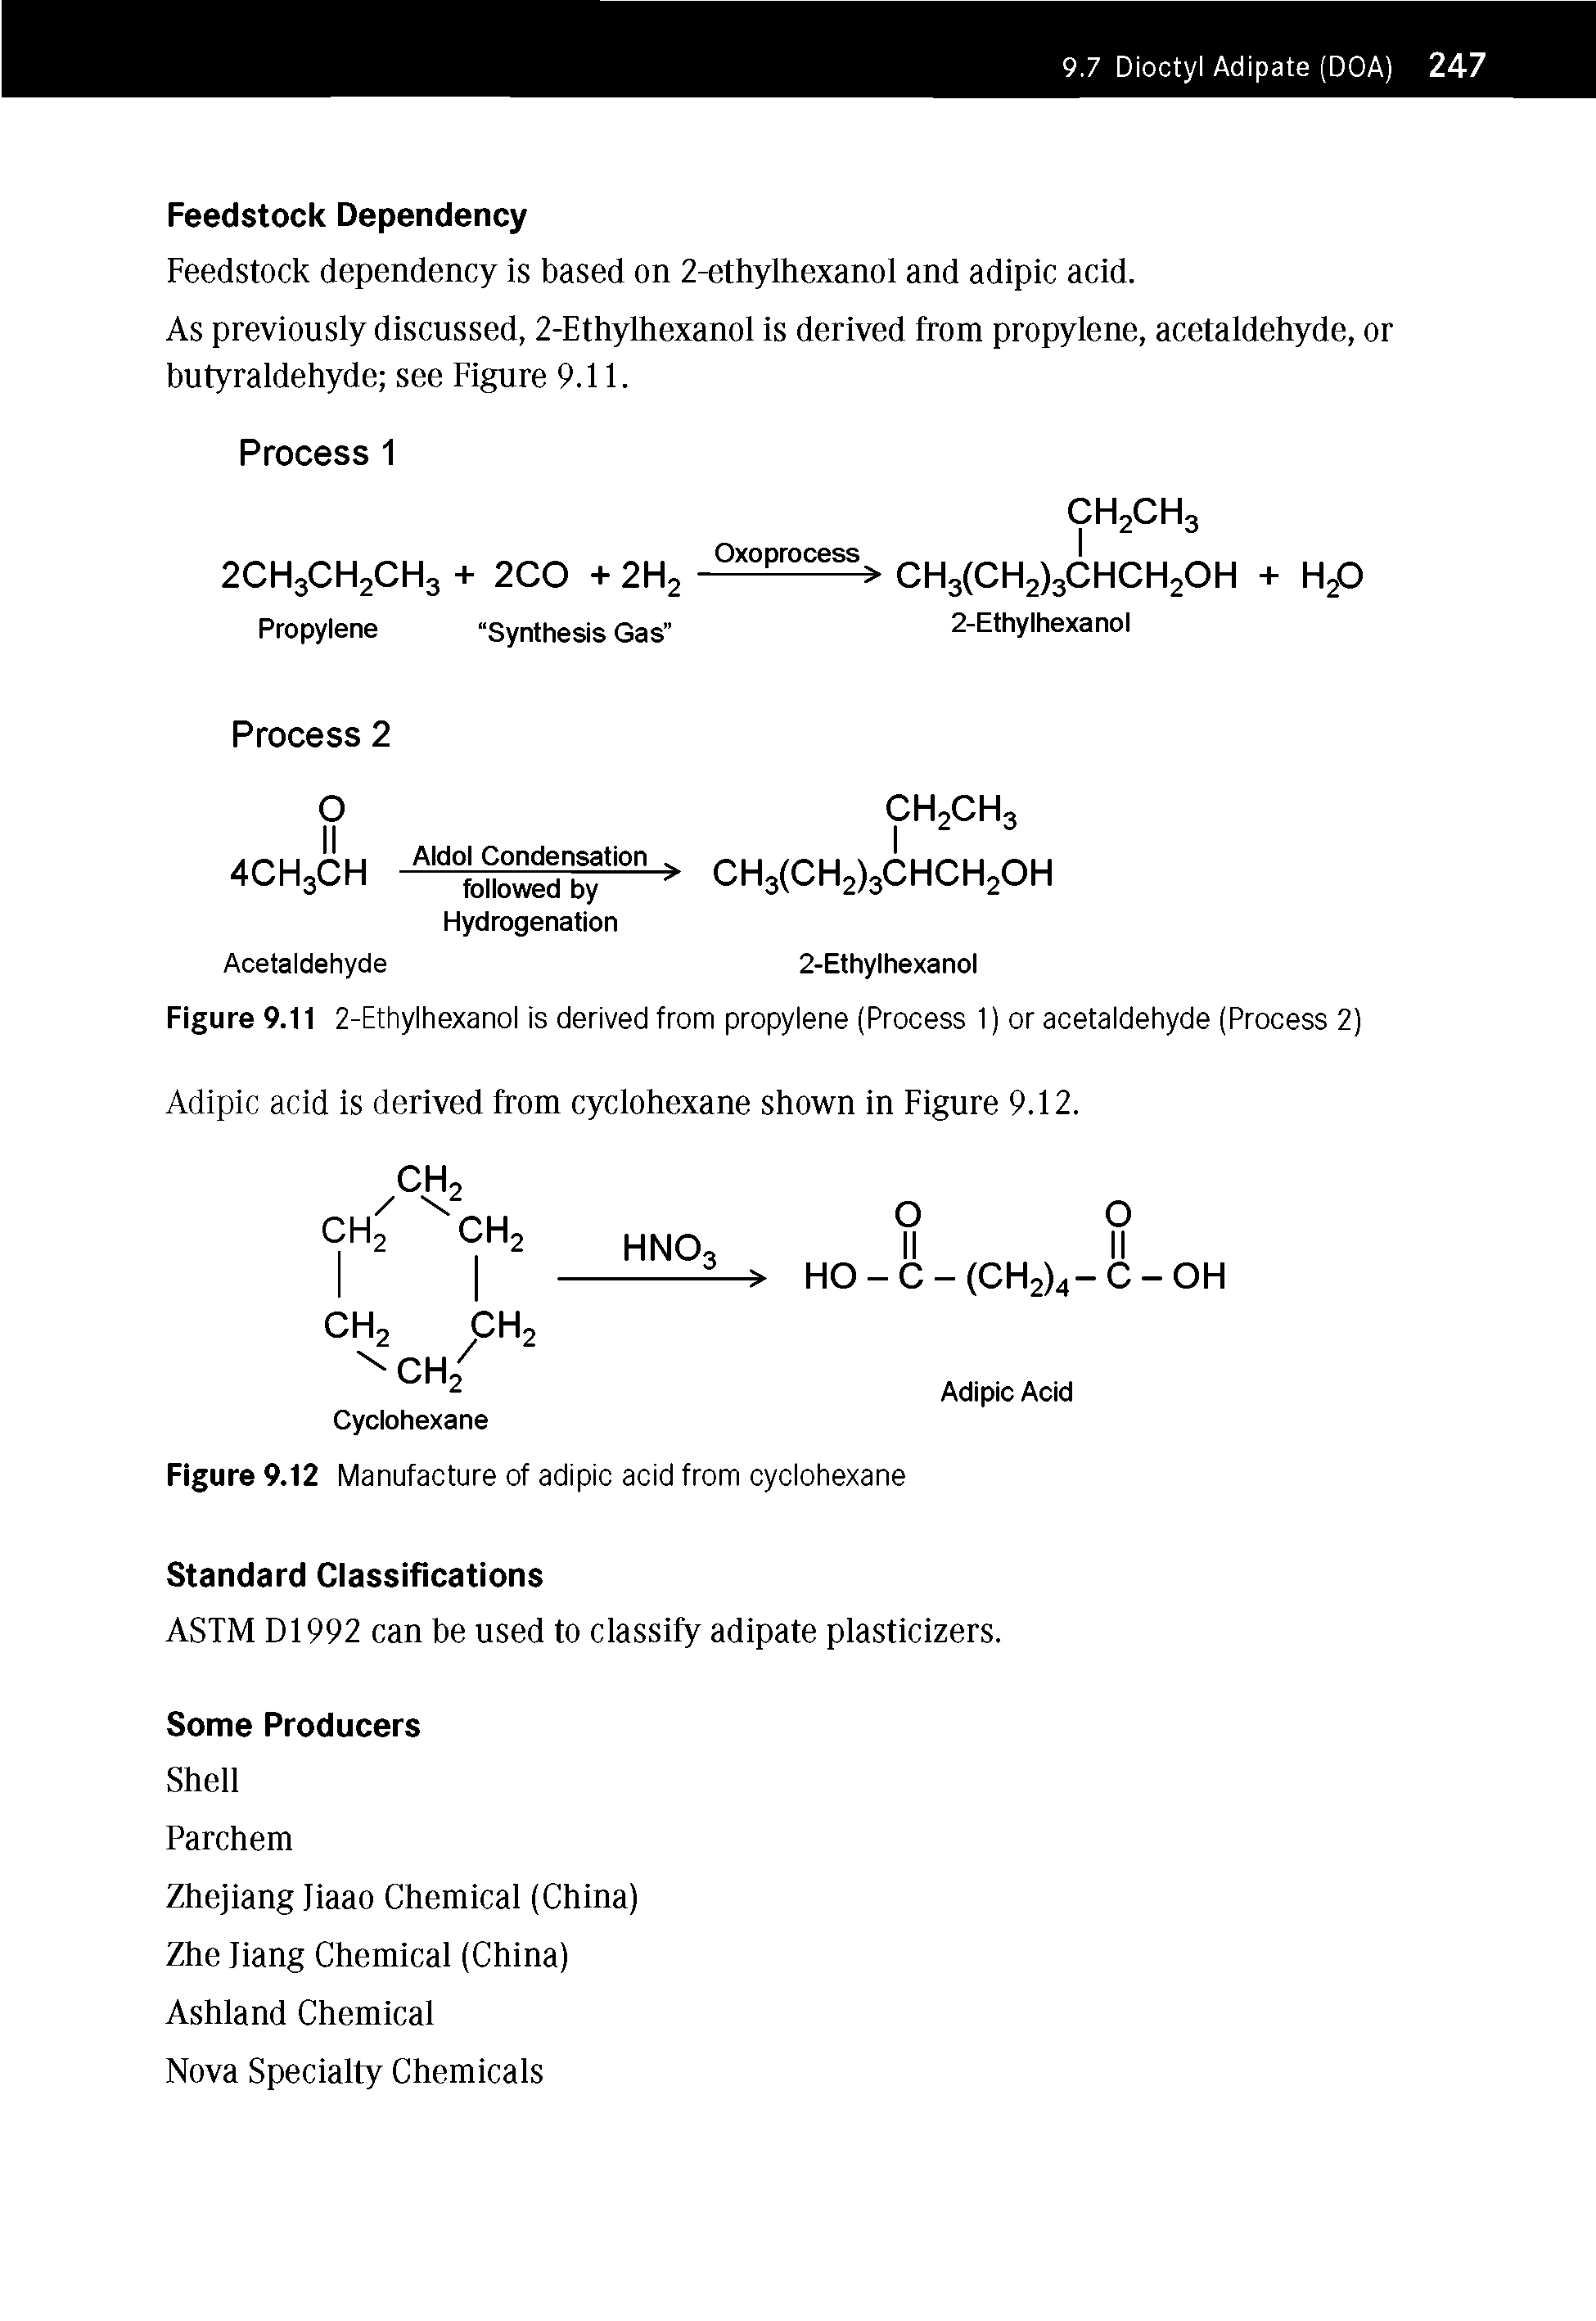 Figure 9.12 Manufacture of adipic acid from cyclohexane...